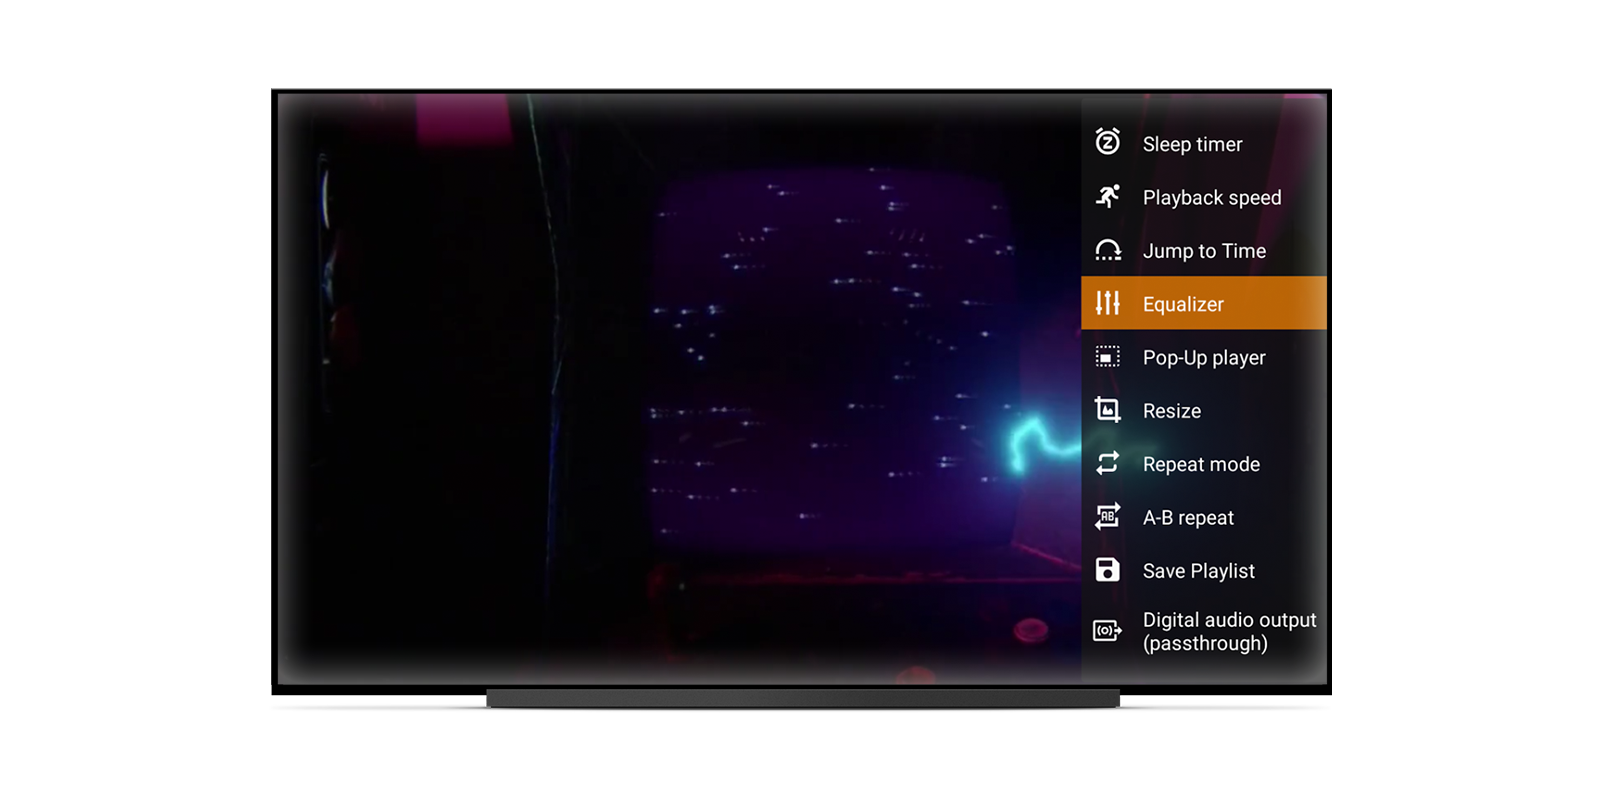 VLC 针对 Android TV 上的大屏幕 Leanback 观看体验进行了优化